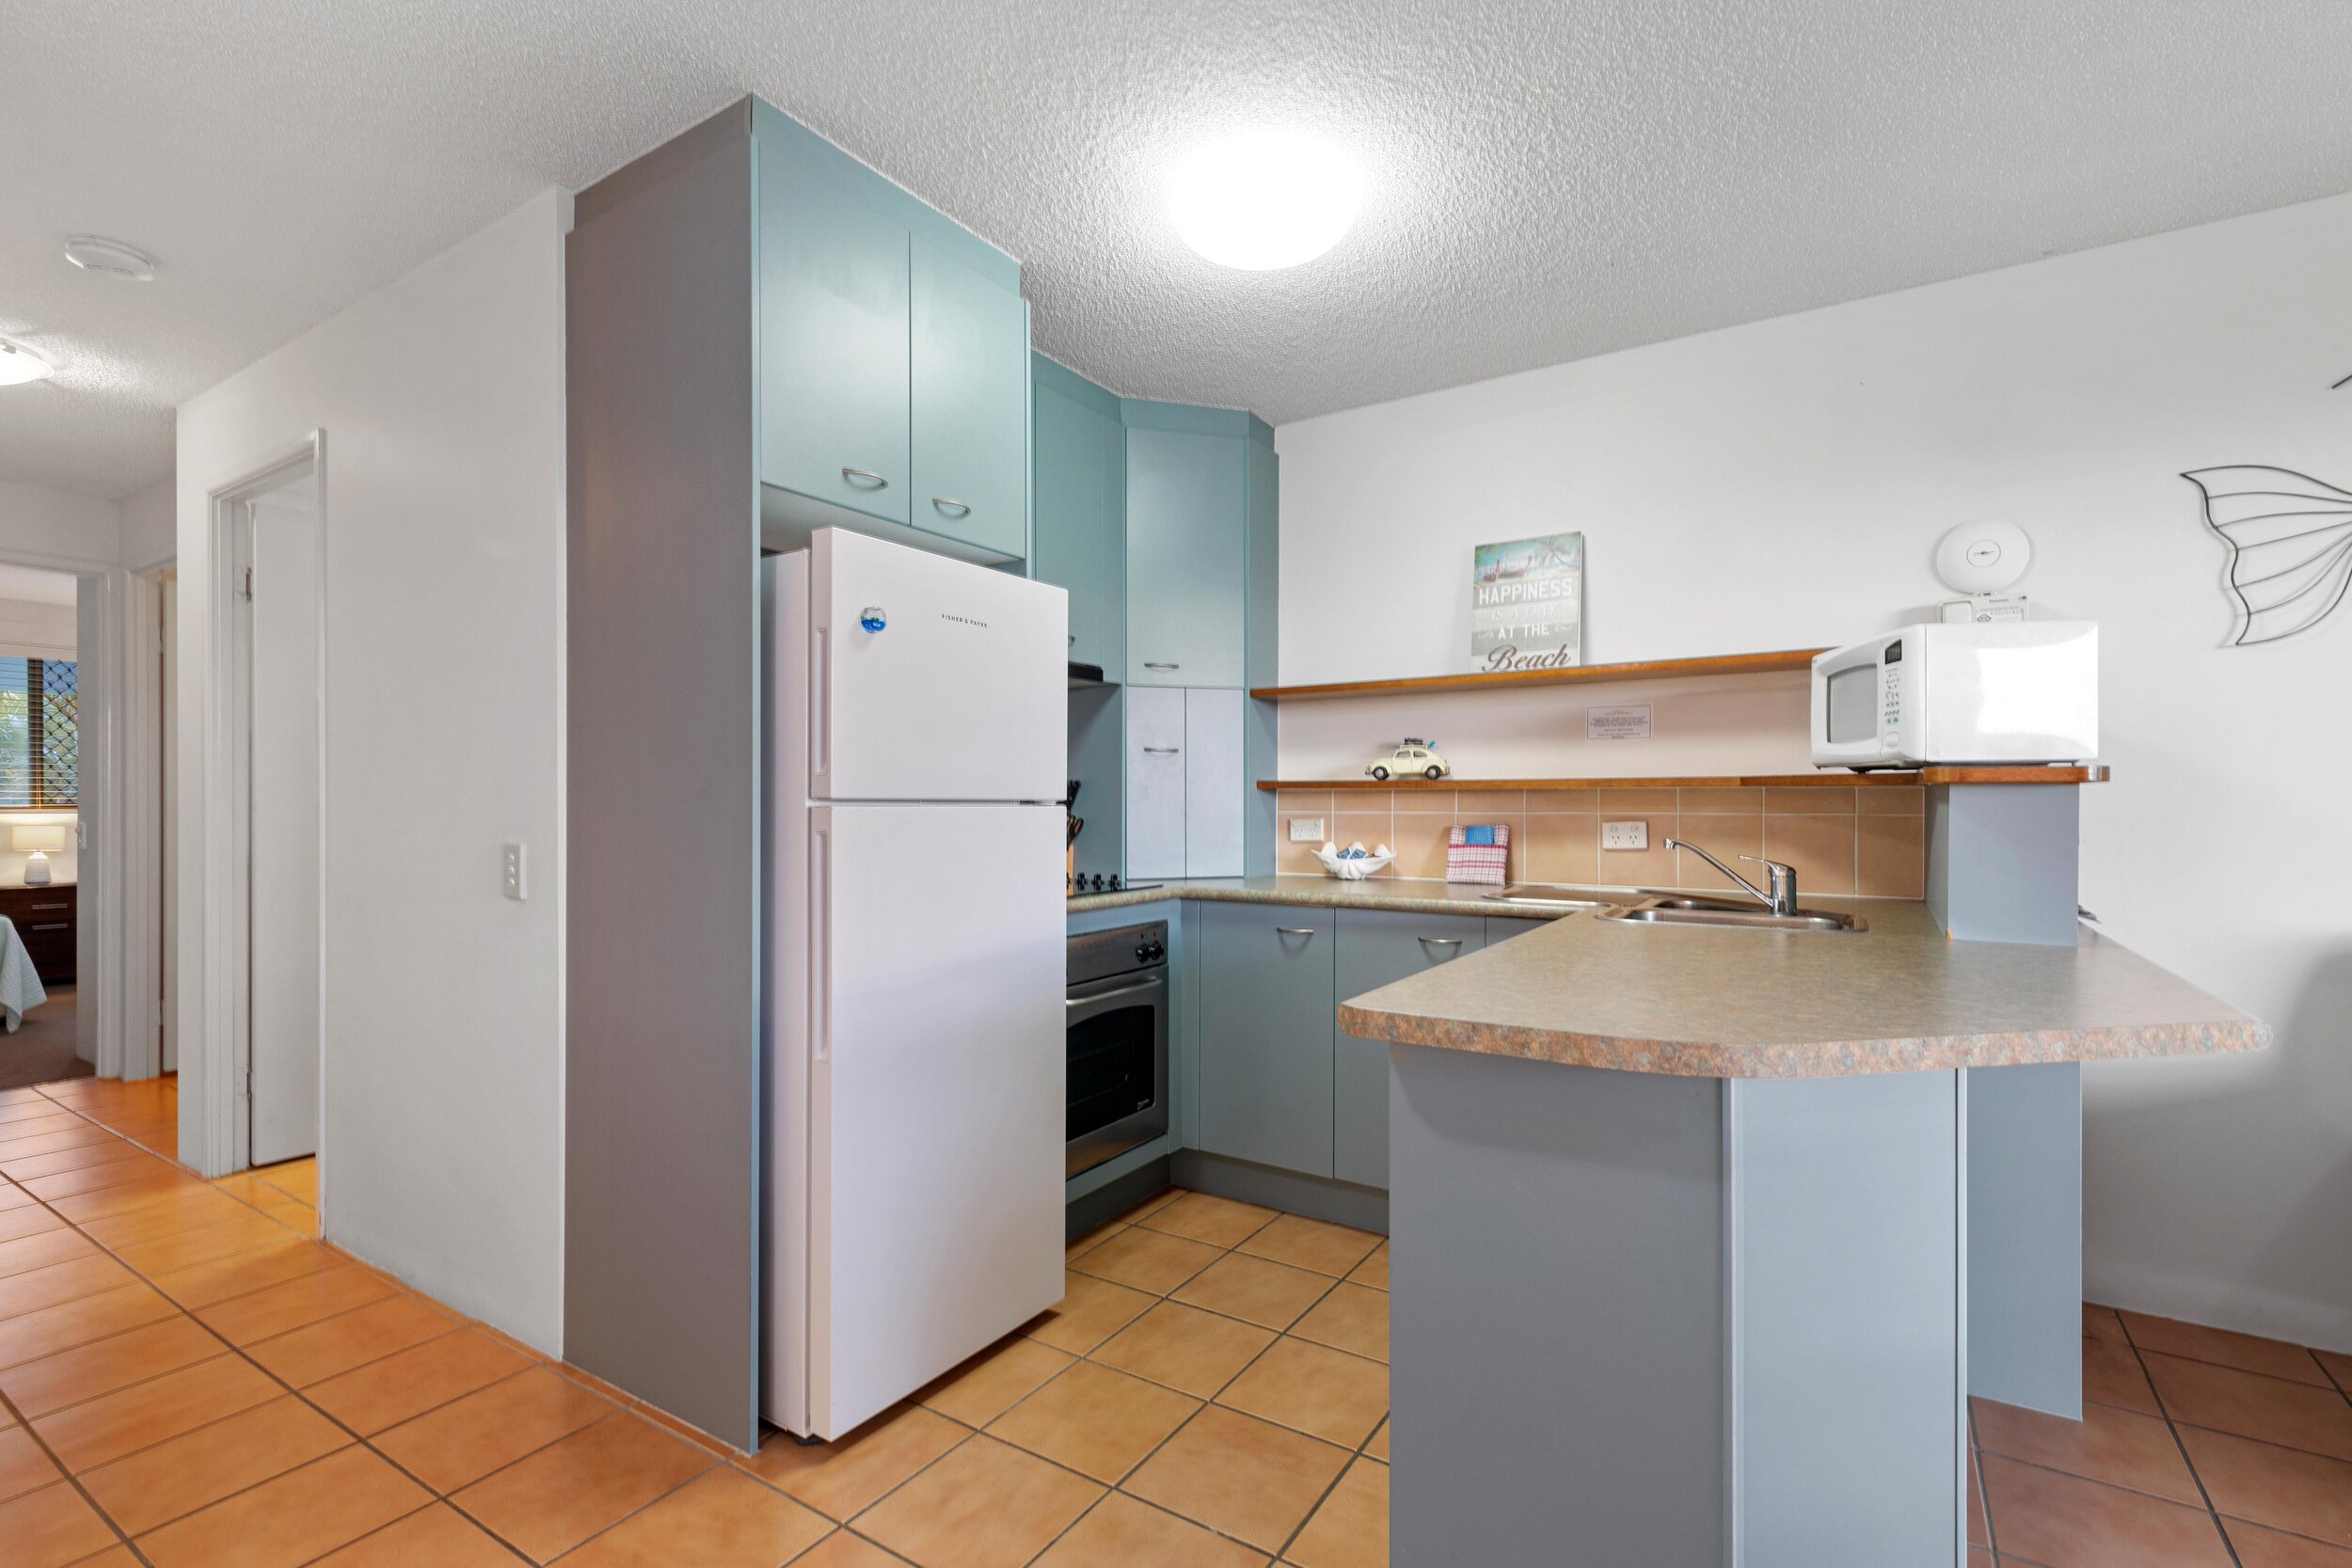 Kings-Bay-Apartments-kitchen2.jpg